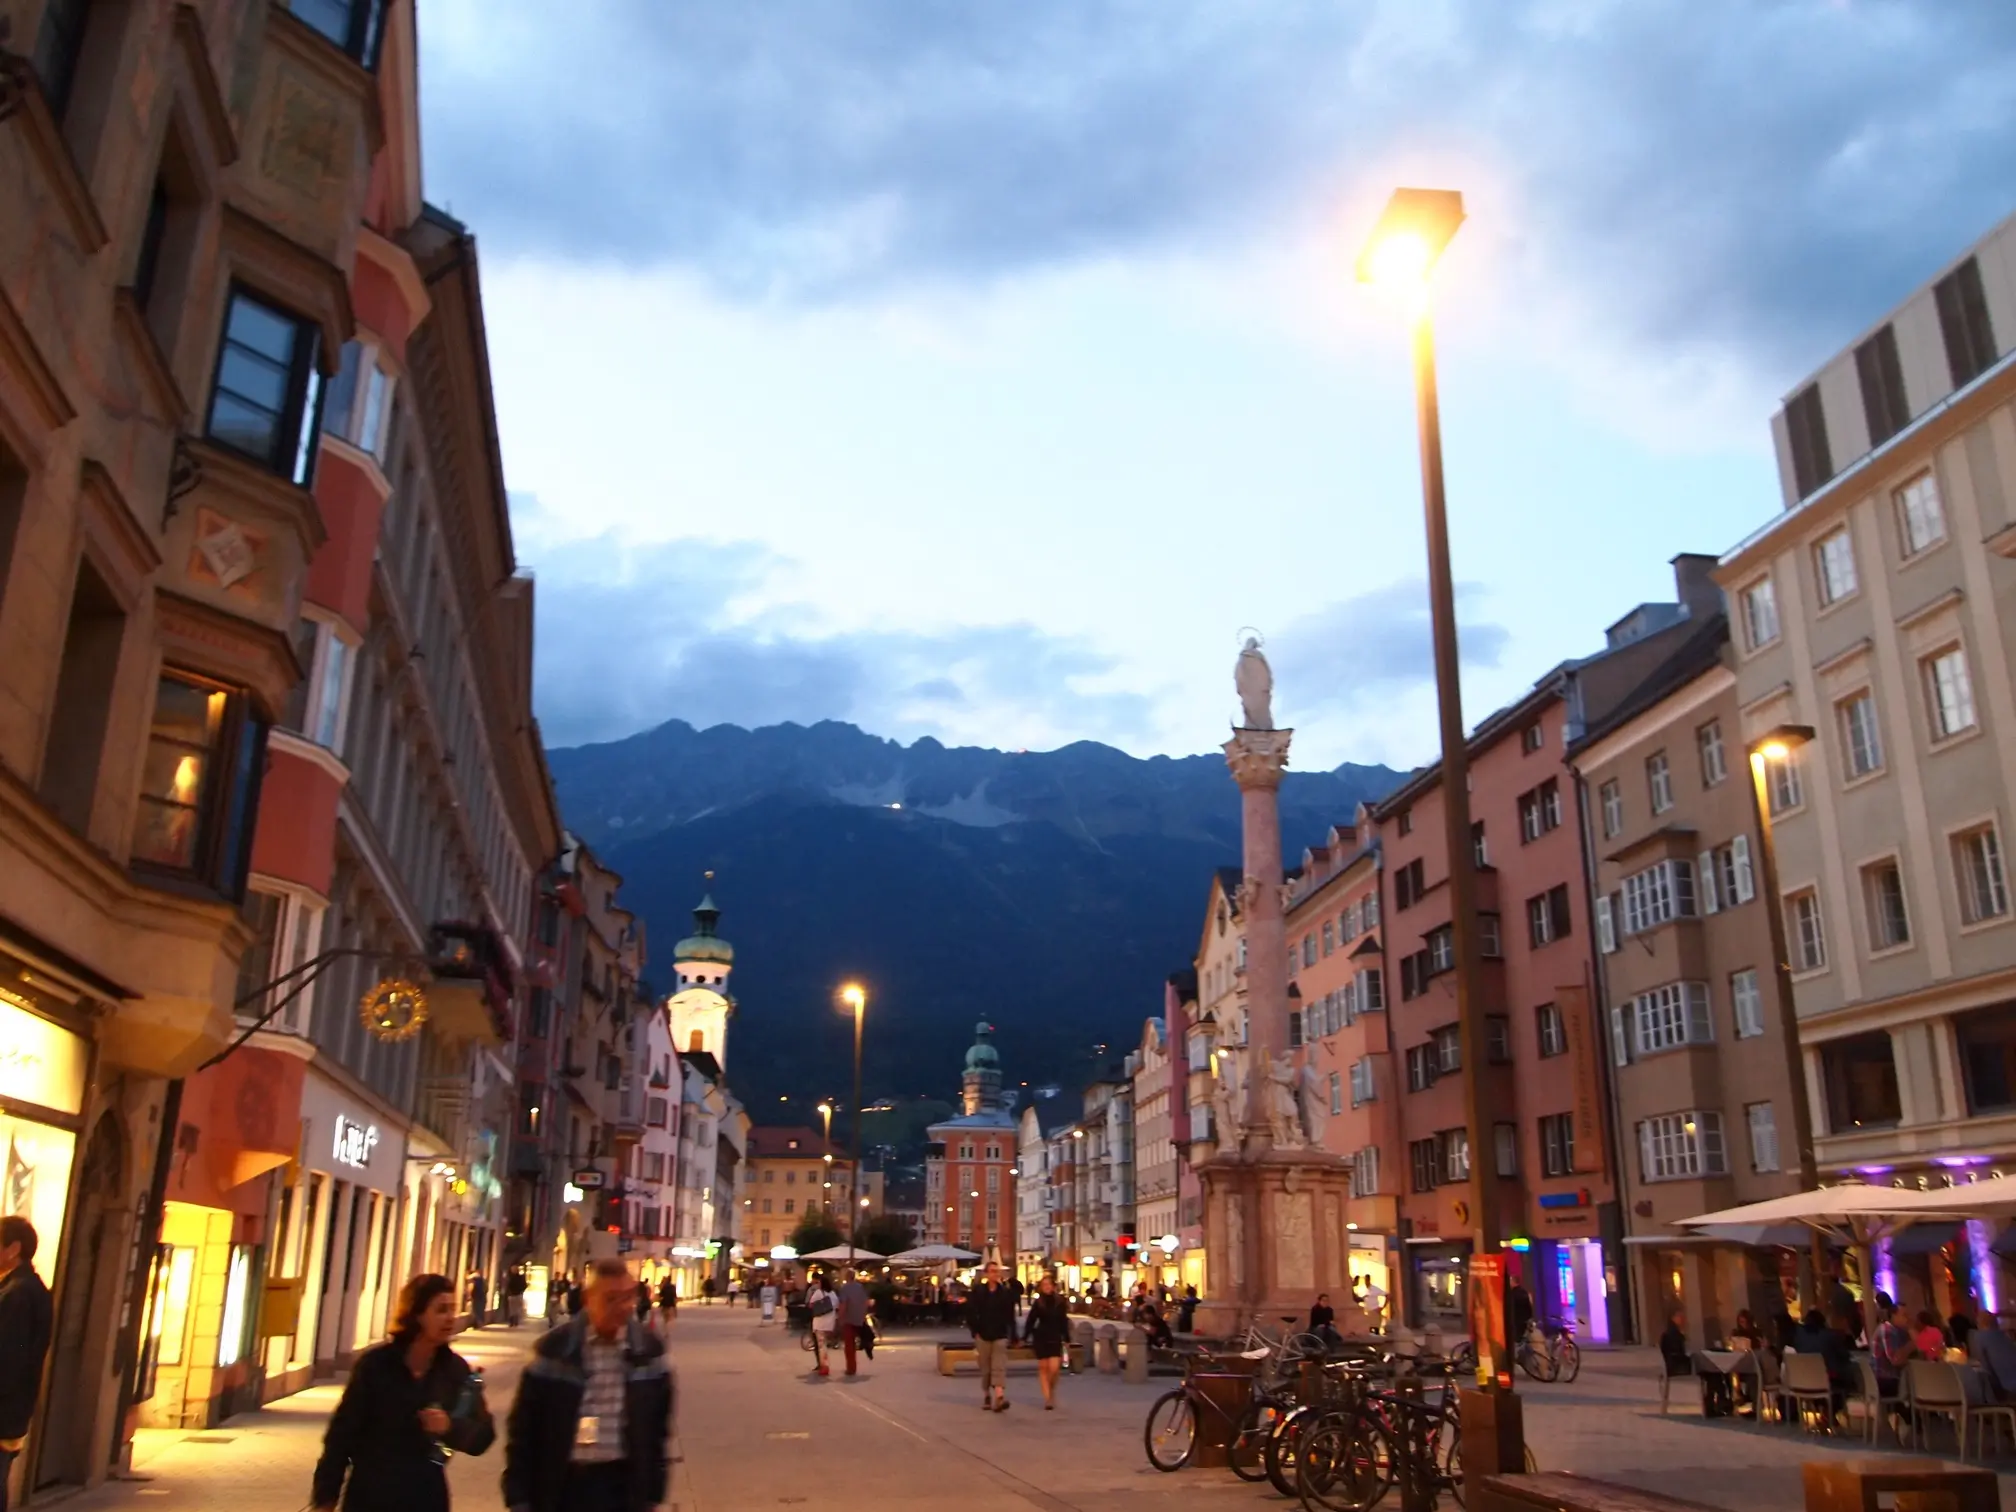 Innsbruck old town / Innsbruck Altstadt